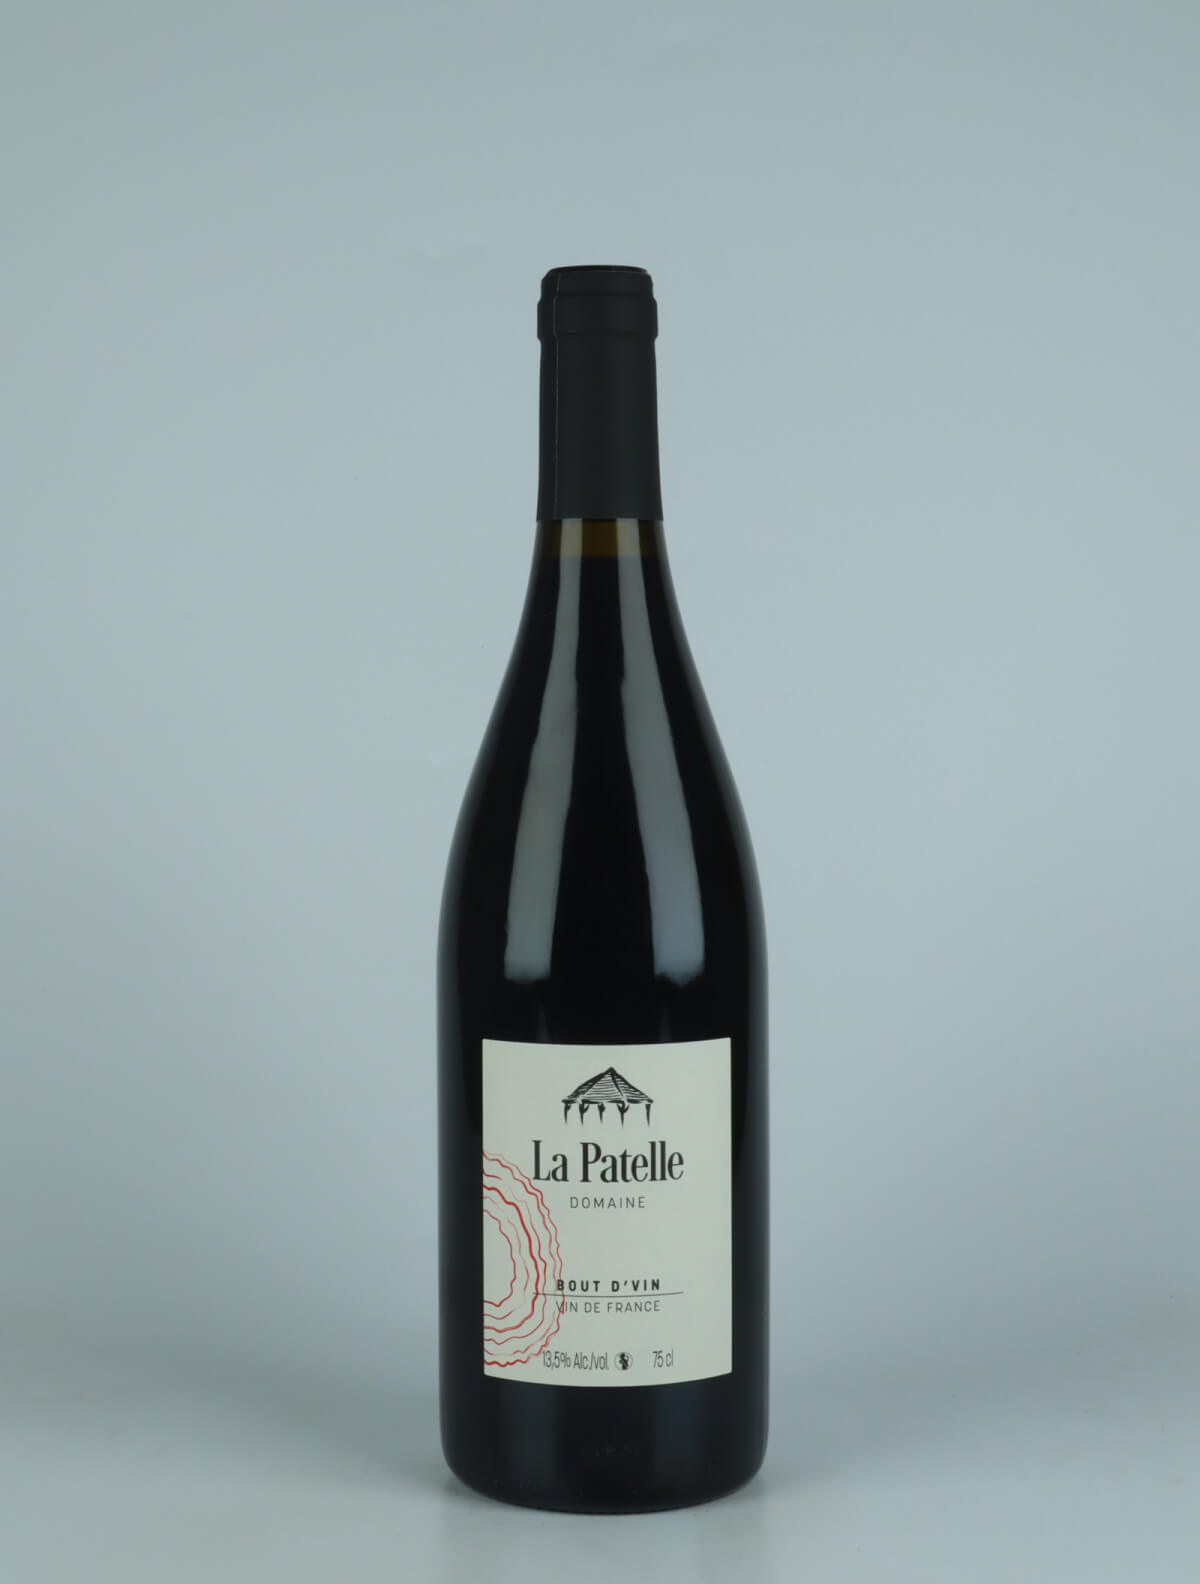 En flaske 2022 Bout d'Vin - Trousseau Rødvin fra Domaine de La Patelle, Jura i Frankrig